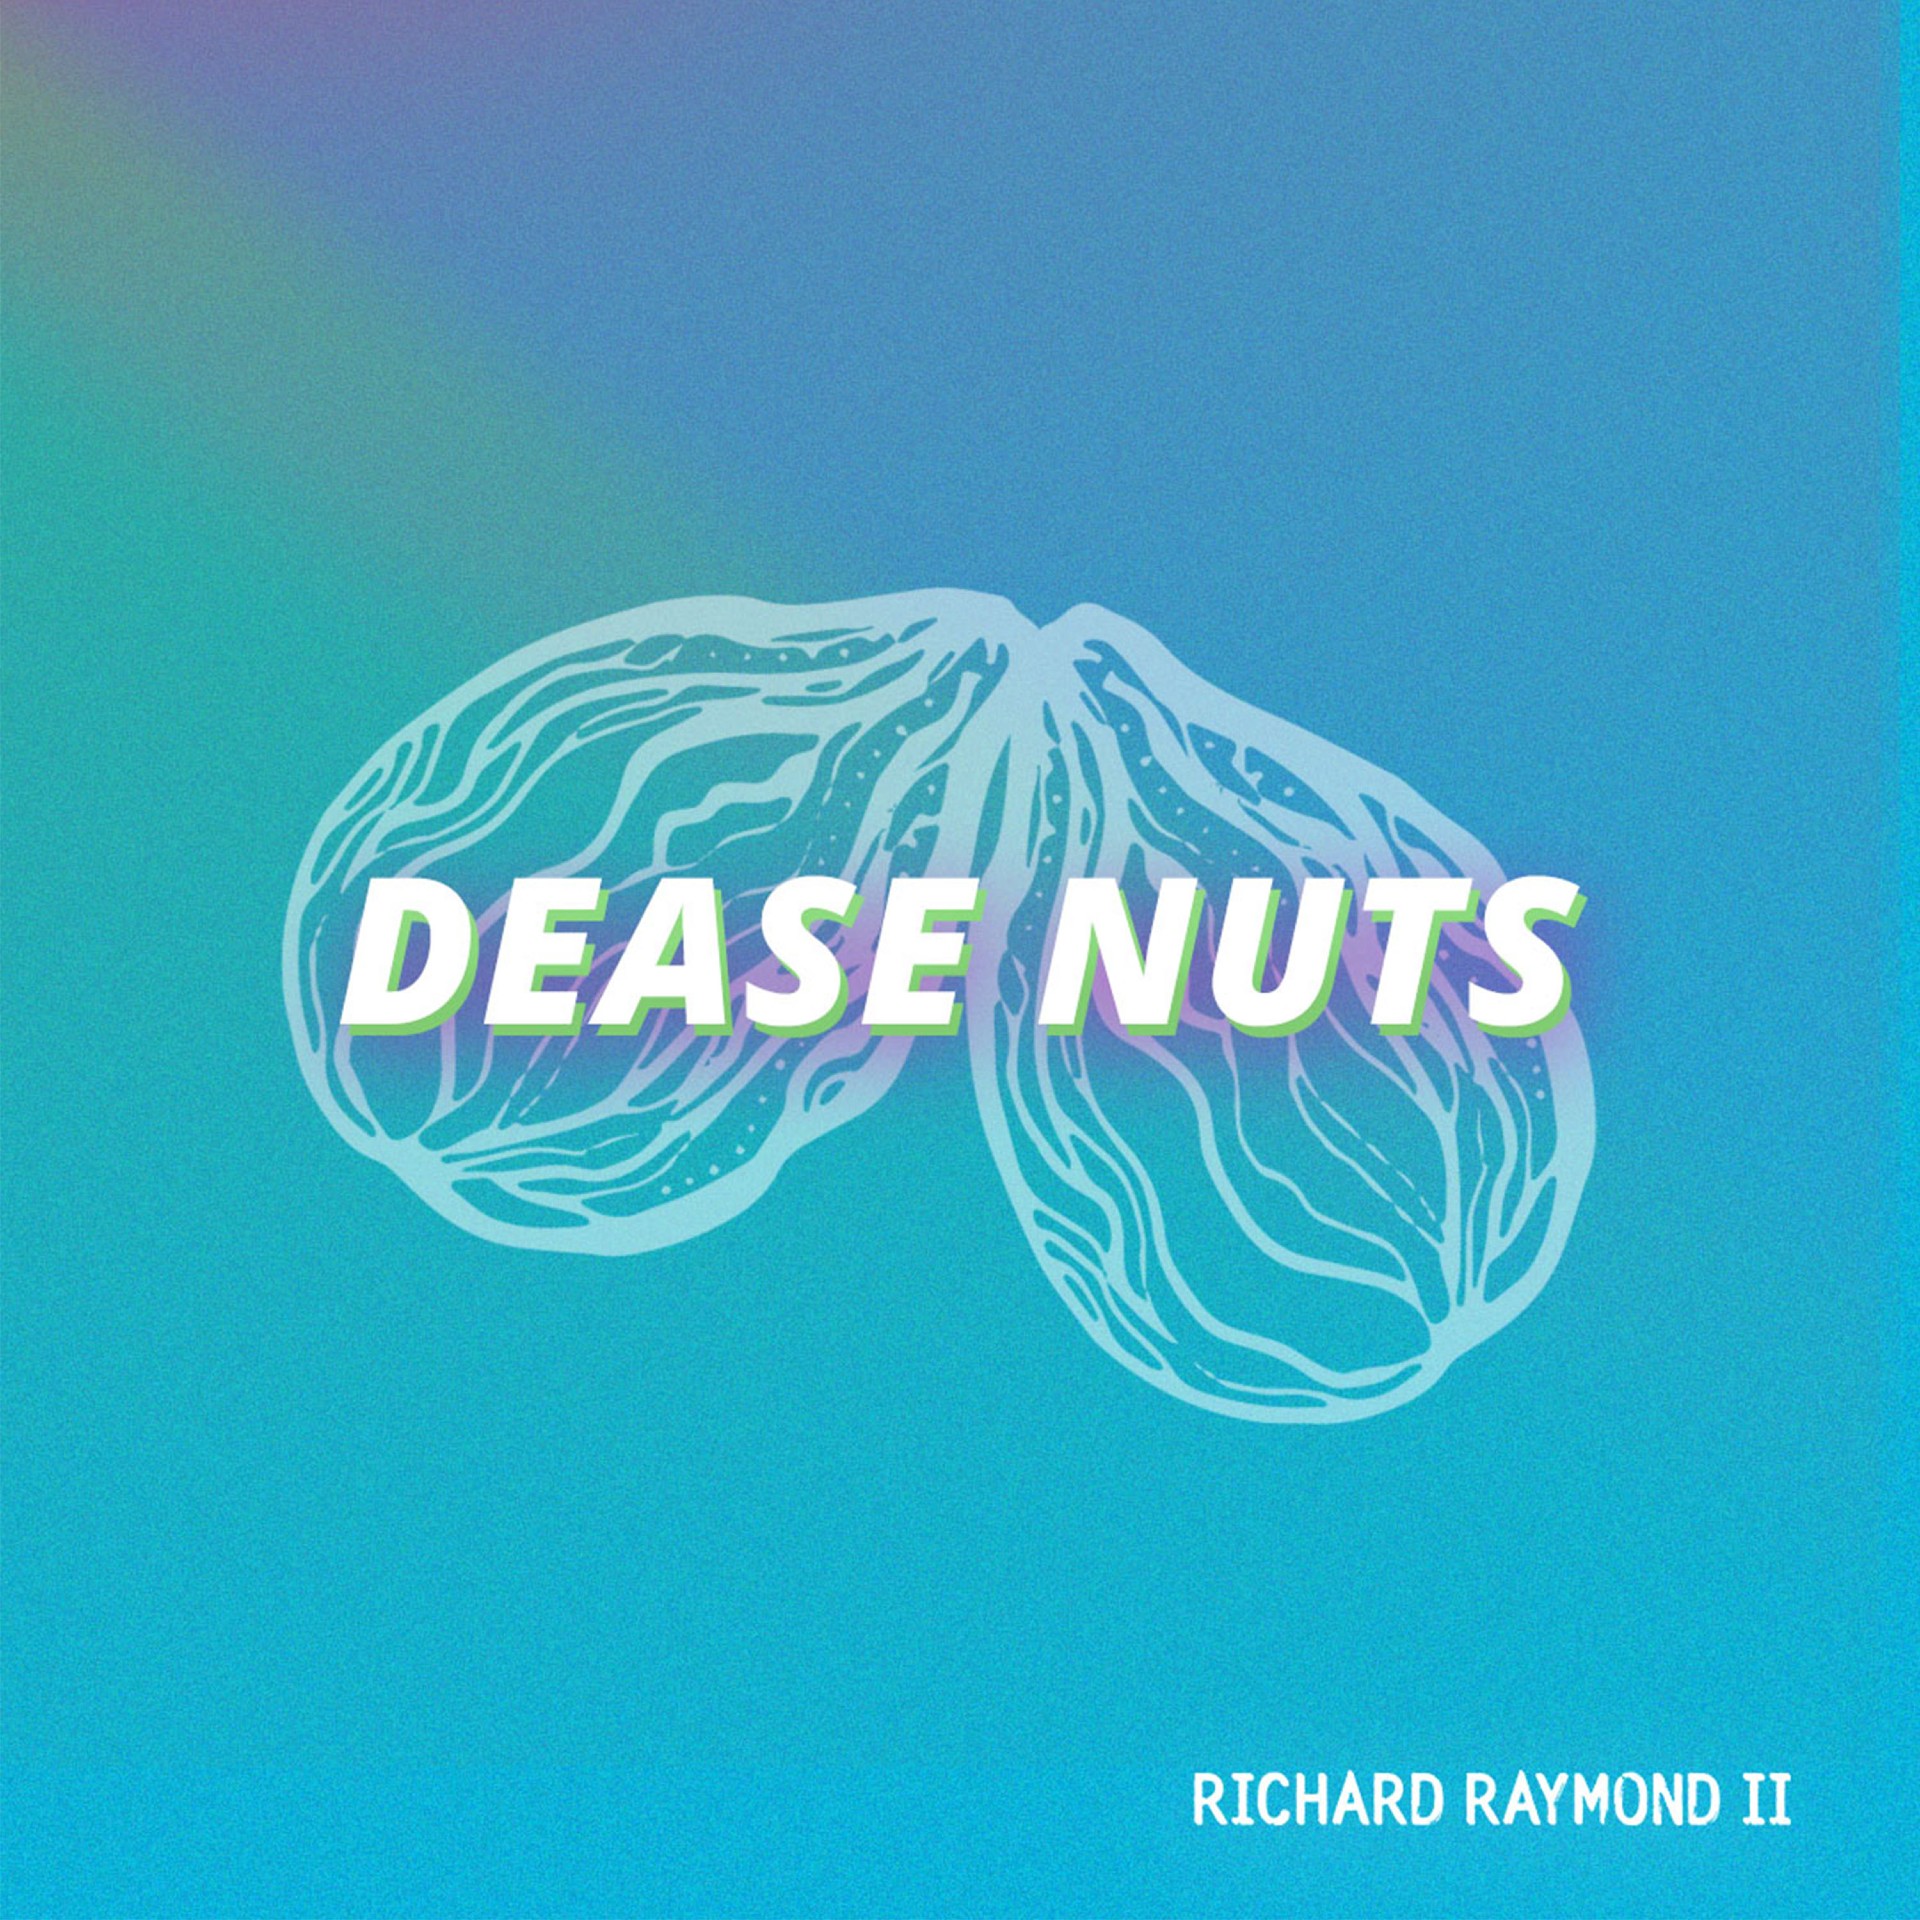 Richard Raymond II "Dease Nuts" single artwork